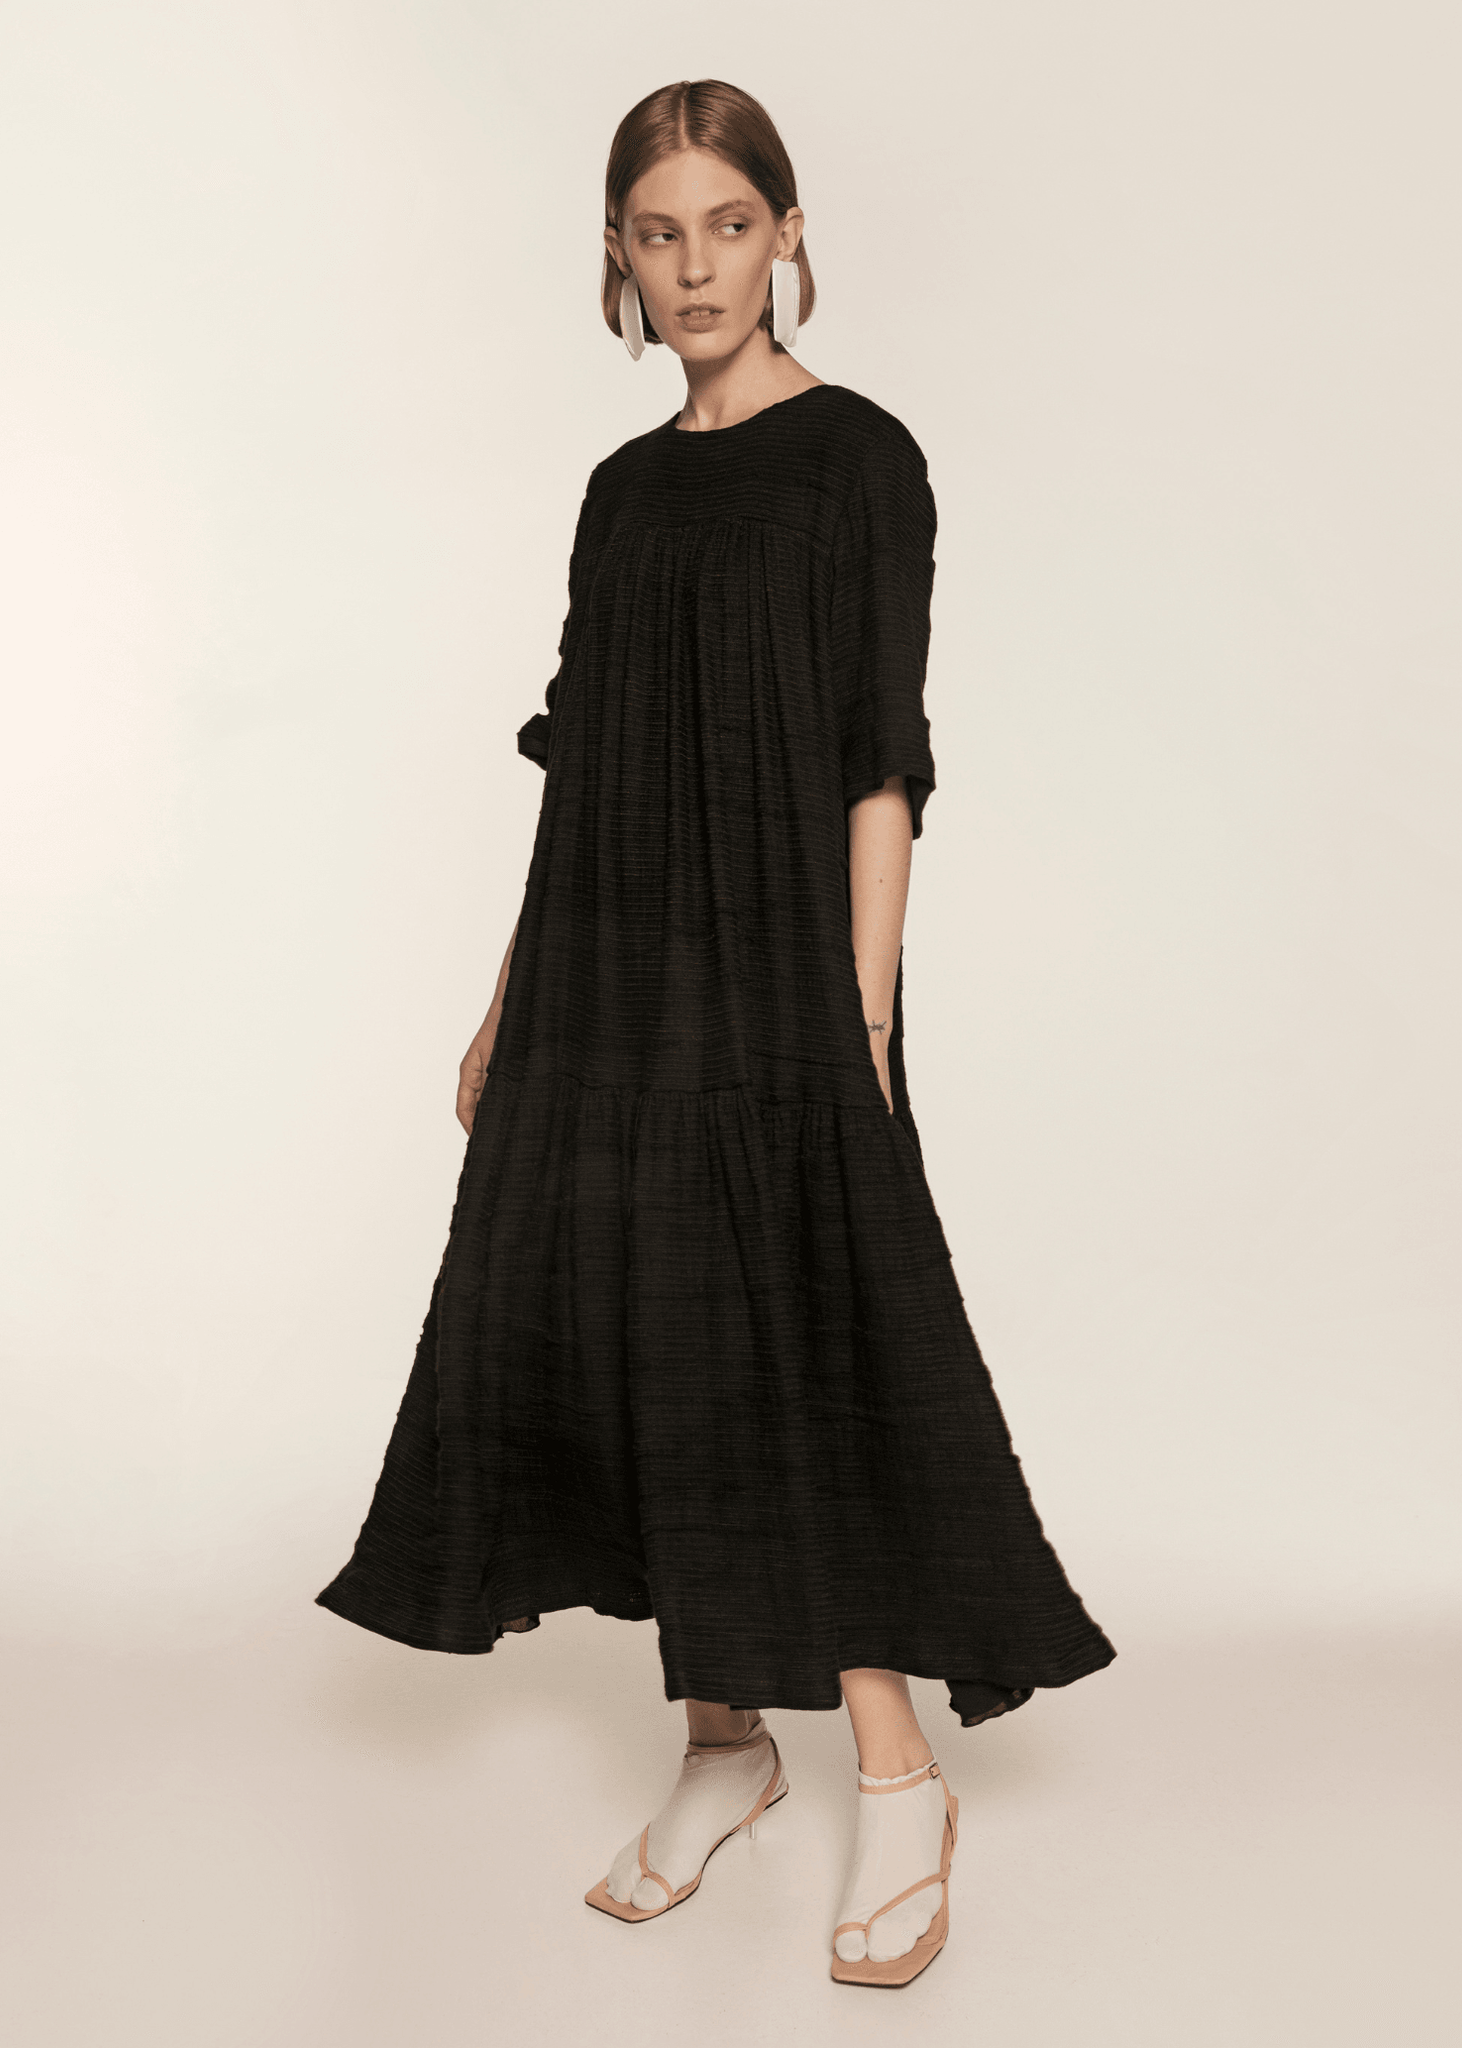 Black Linen Dress | Timeless Sustainable Fashion